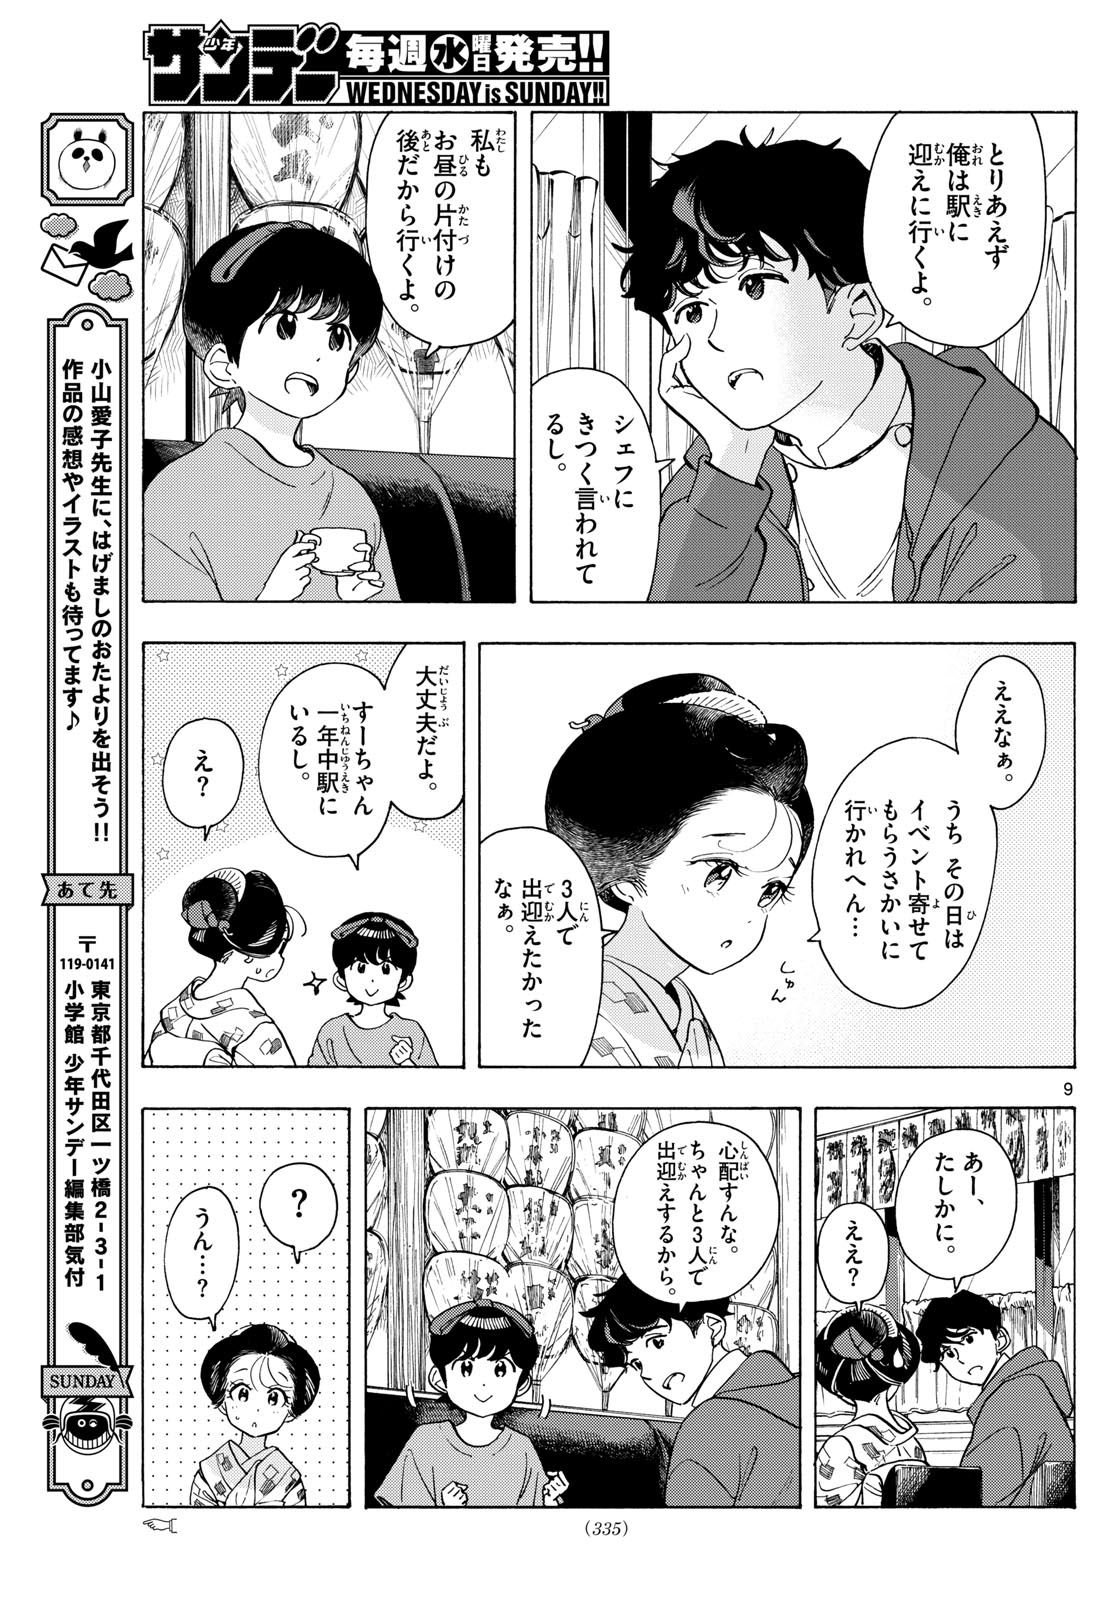 Maiko-san Chi no Makanai-san - Chapter 299 - Page 9